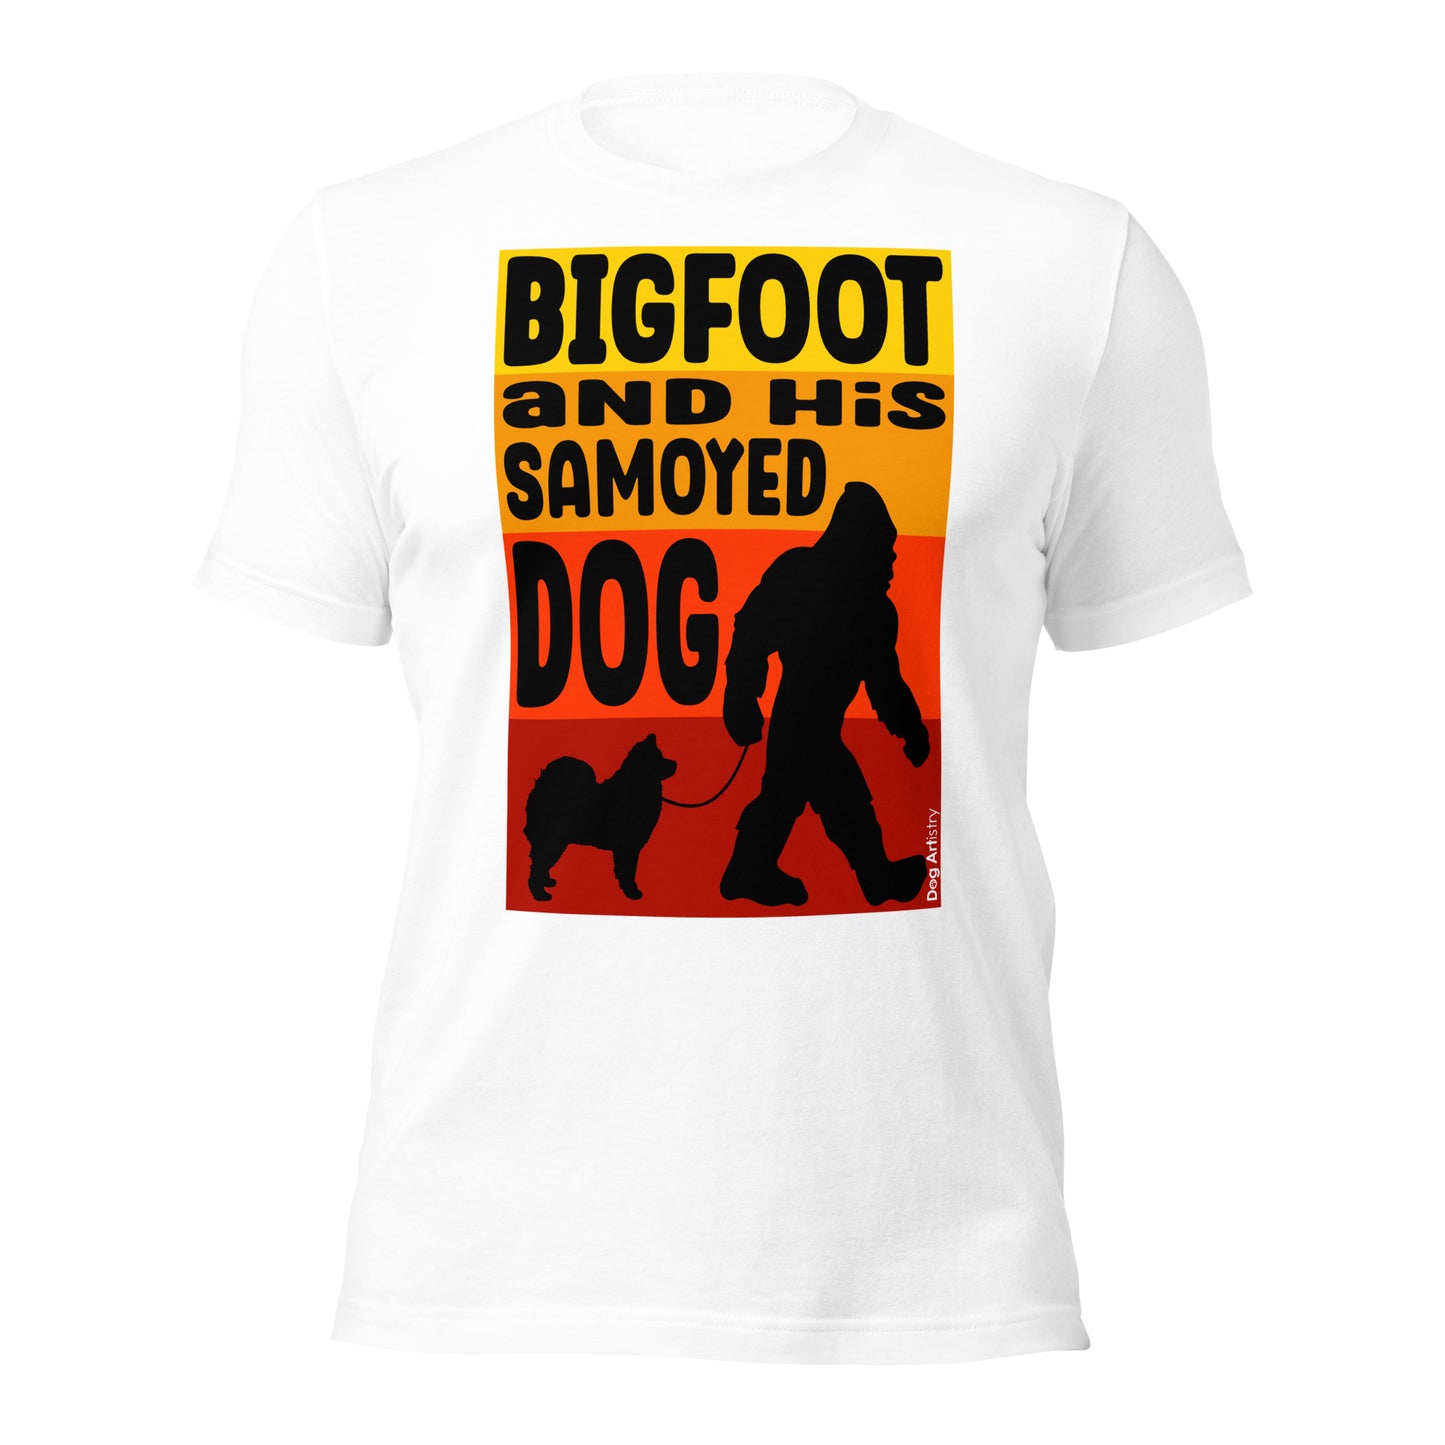 Bigfoot and his Samoyed dog unisex white t-shirt by Dog Artistry.